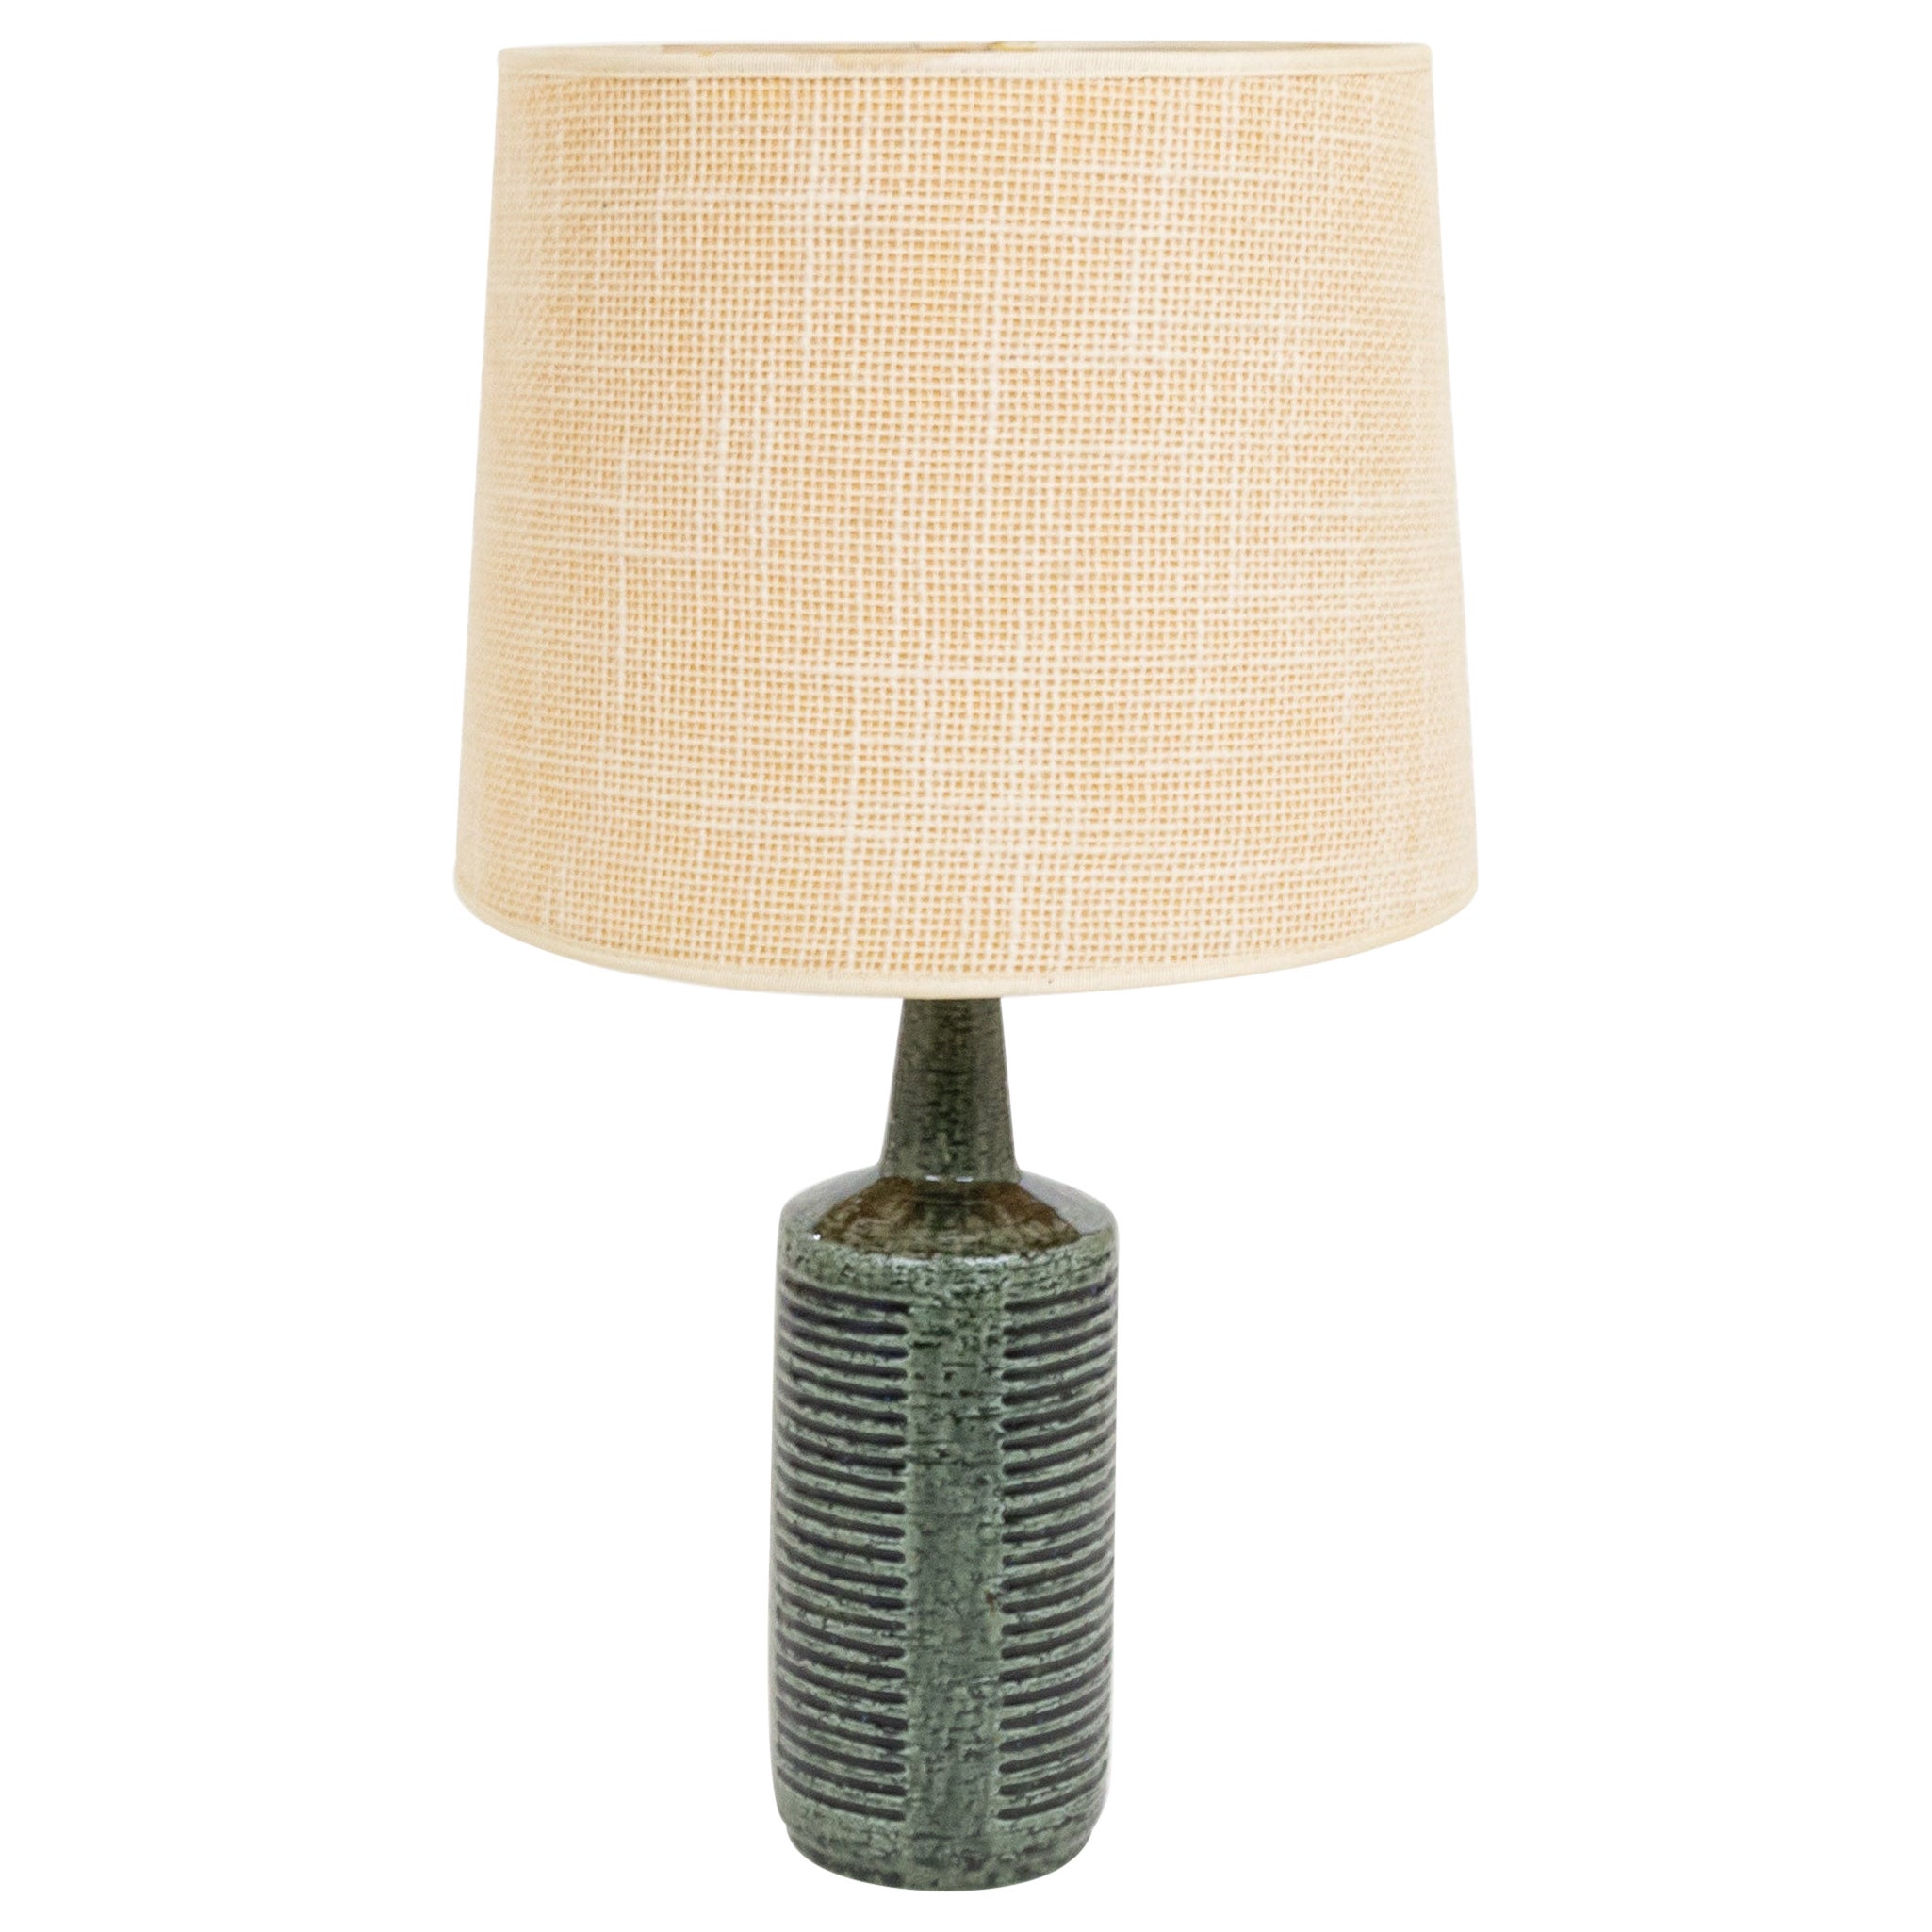 Green & Charcoal DL/30 table lamp by Linnemann-Schmidt for Palshus, 1960s For Sale